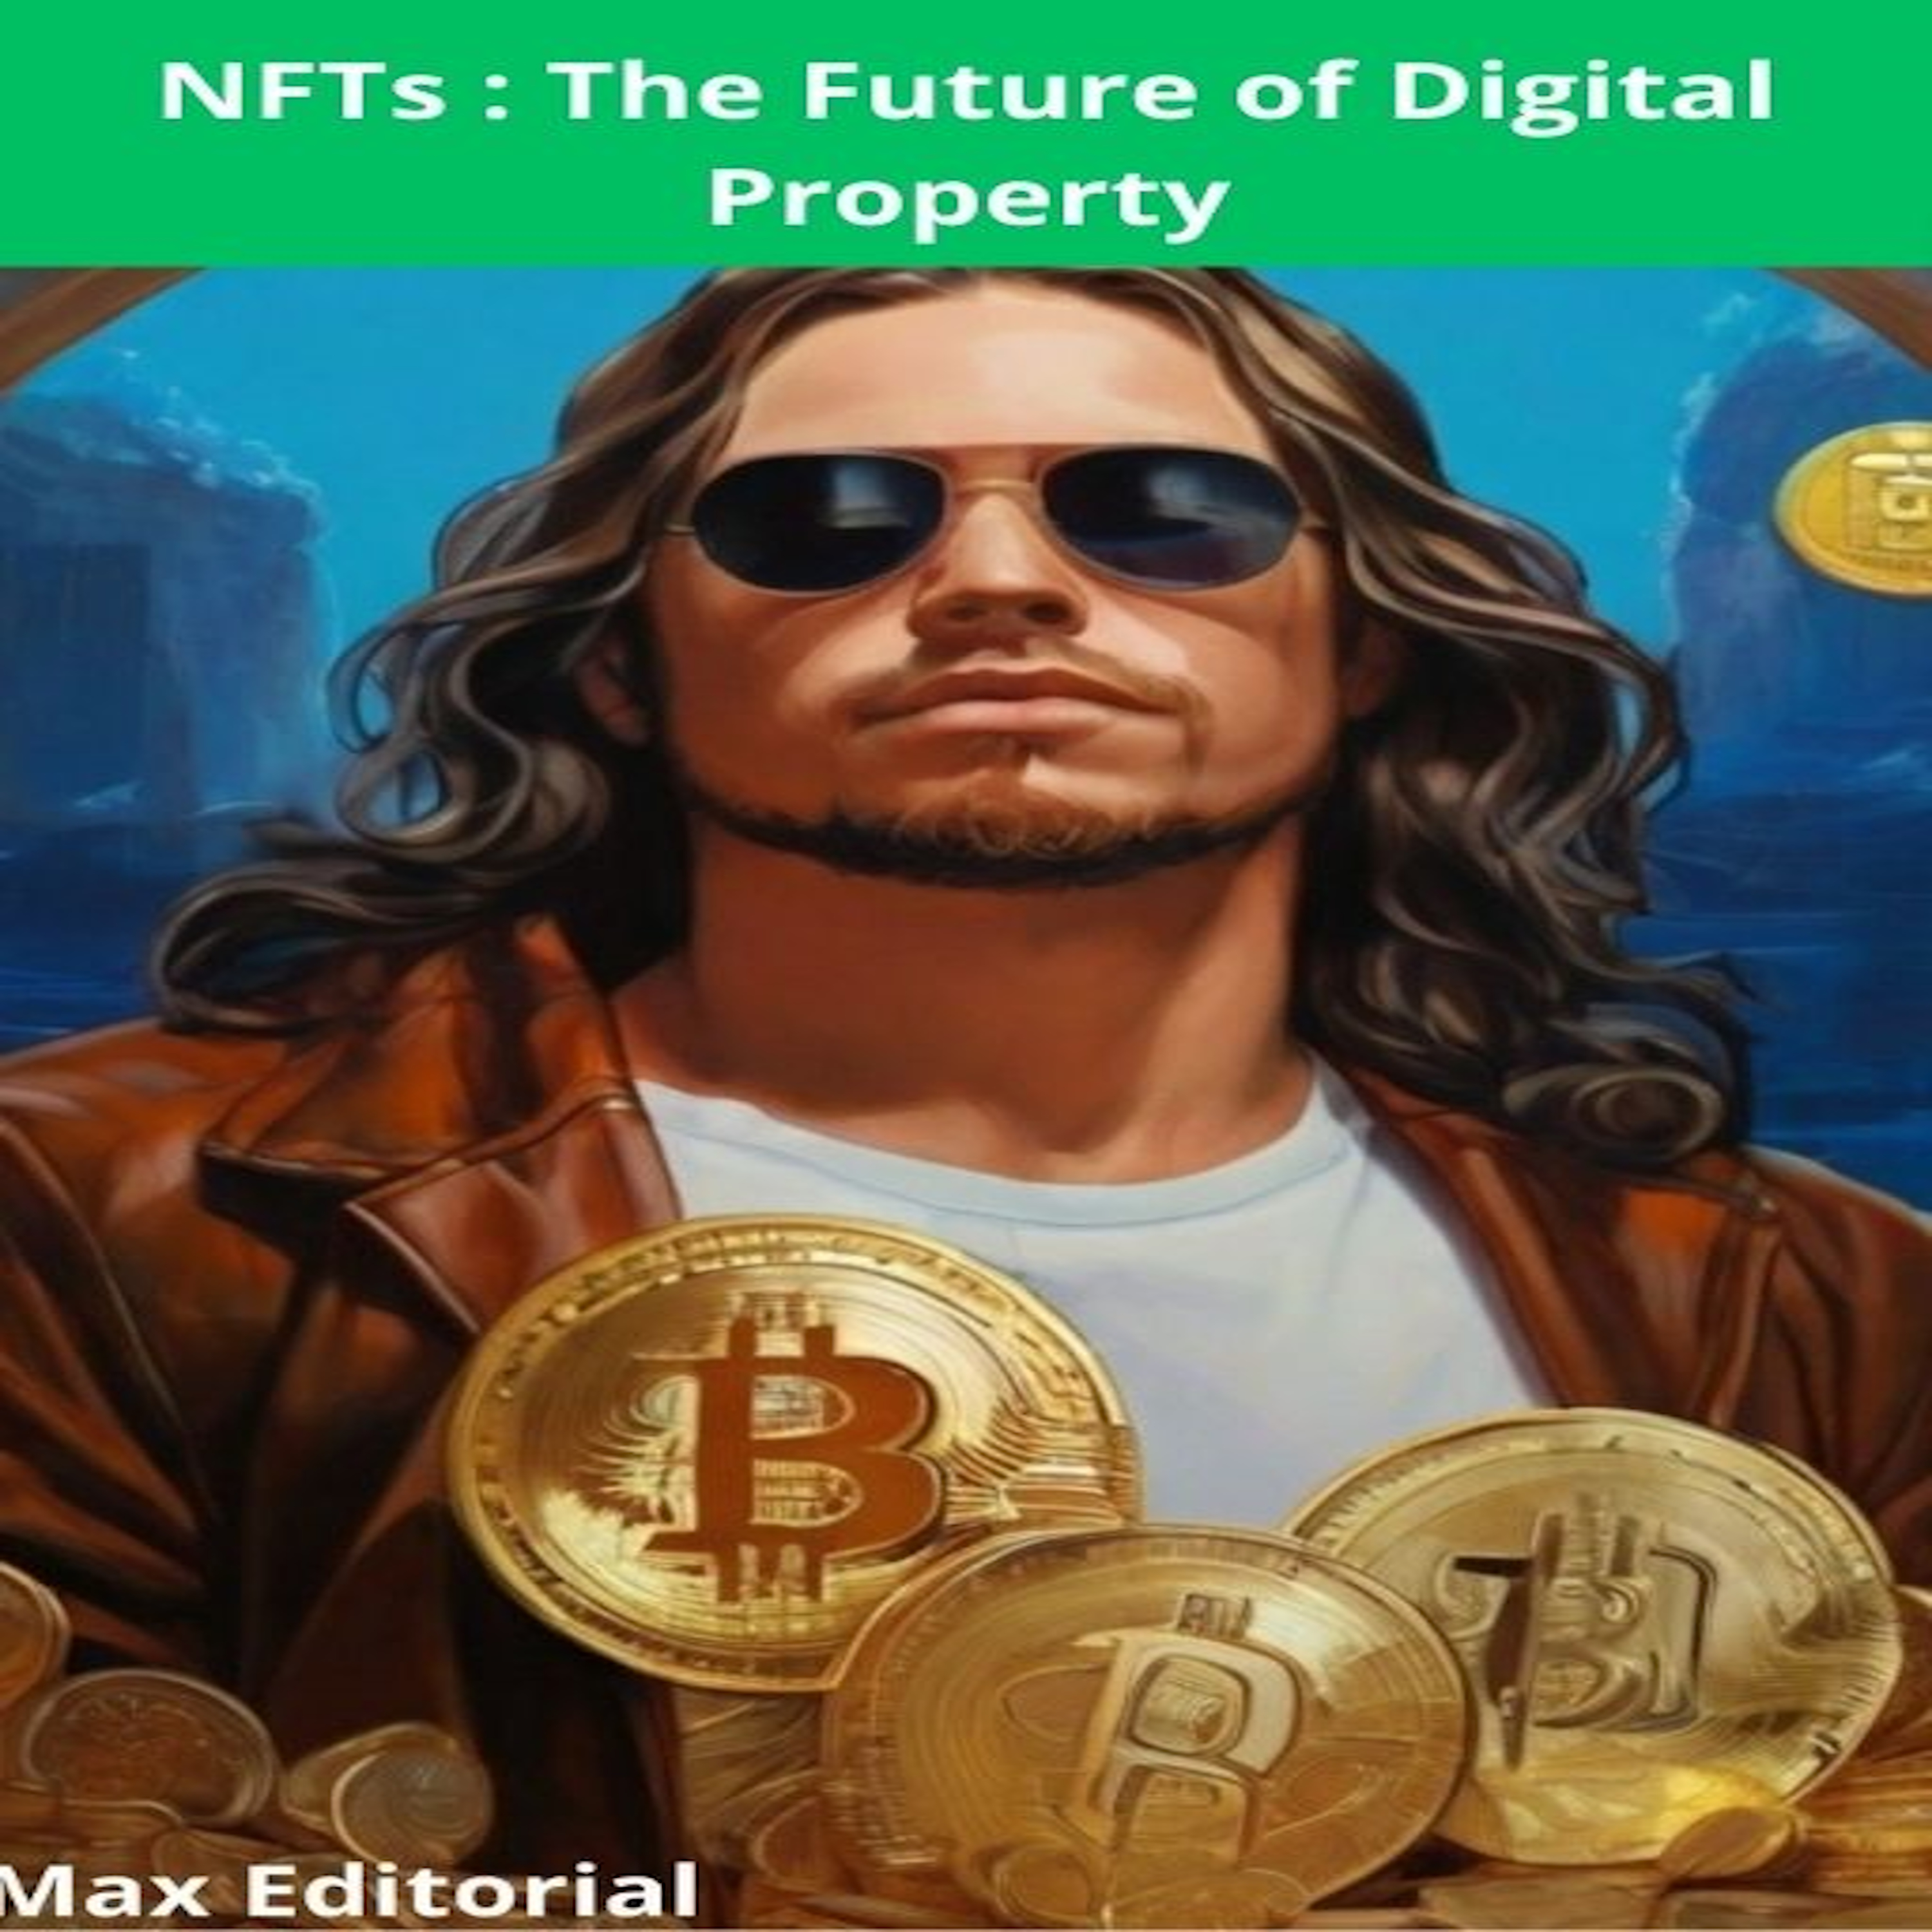 NFTs : The Future of Digital Property